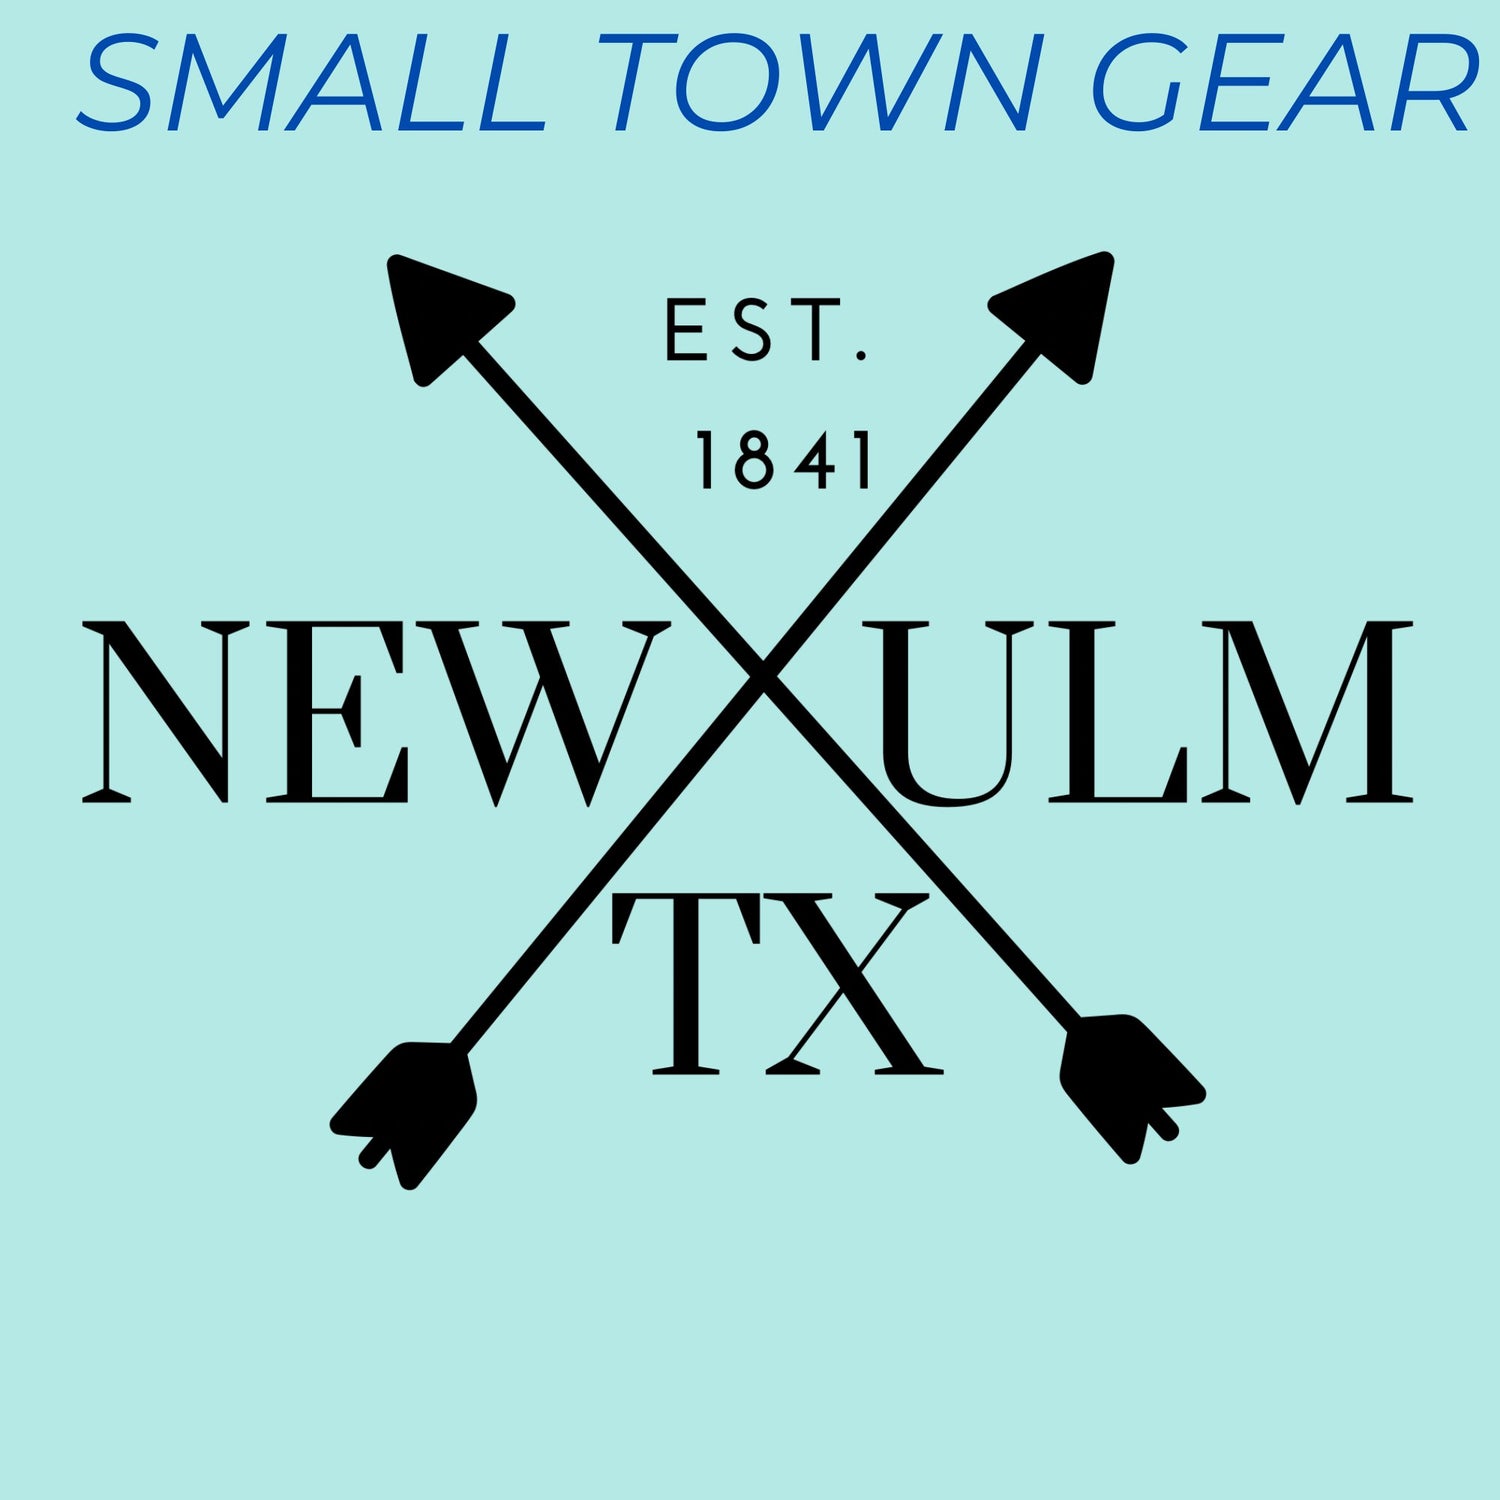 Texas Small Town Gear